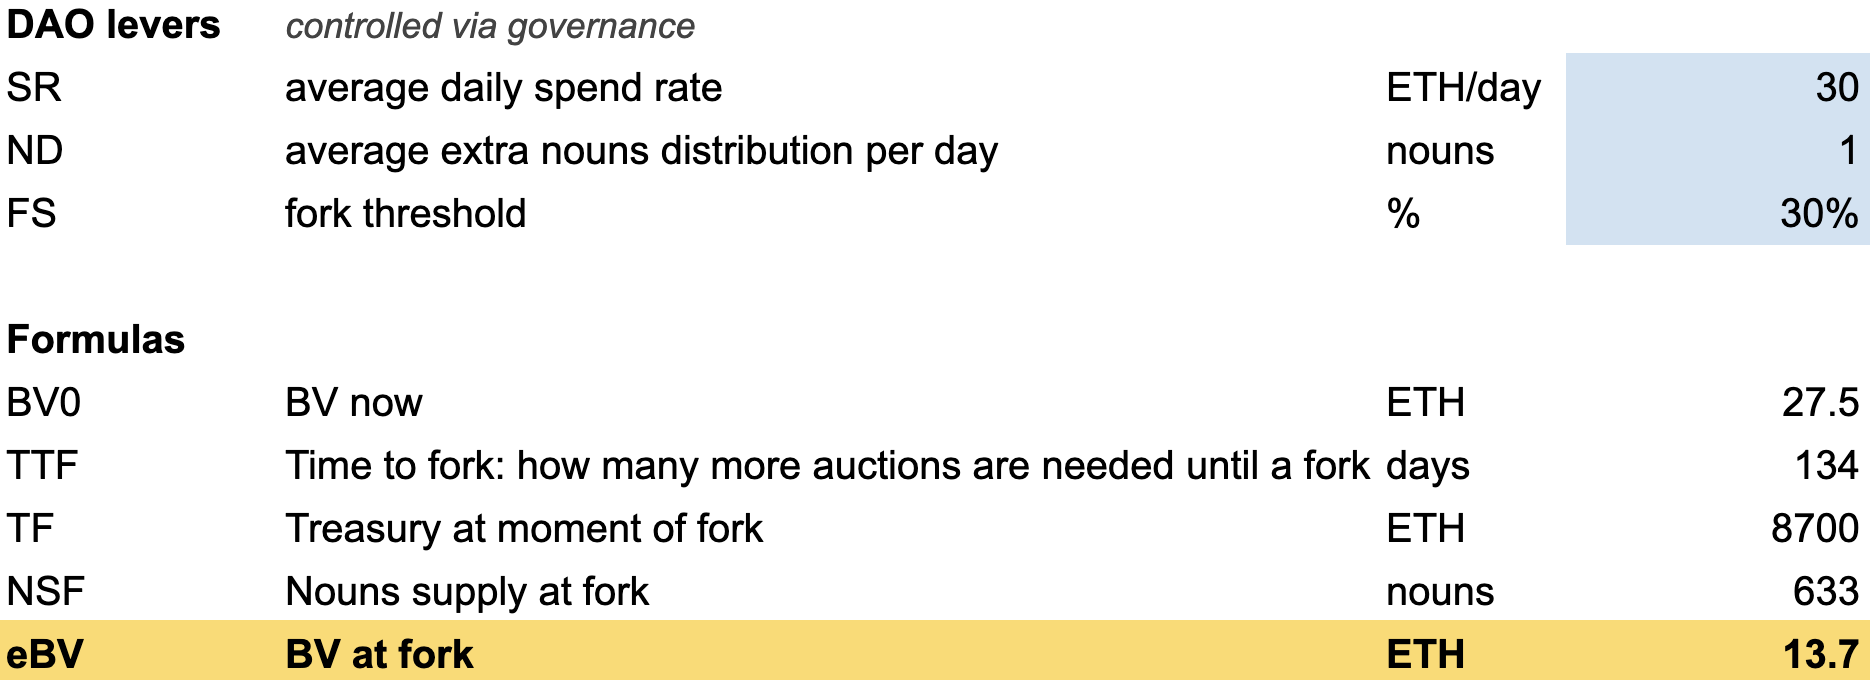 30% Fork Threshold, 1 nouns distribution per day